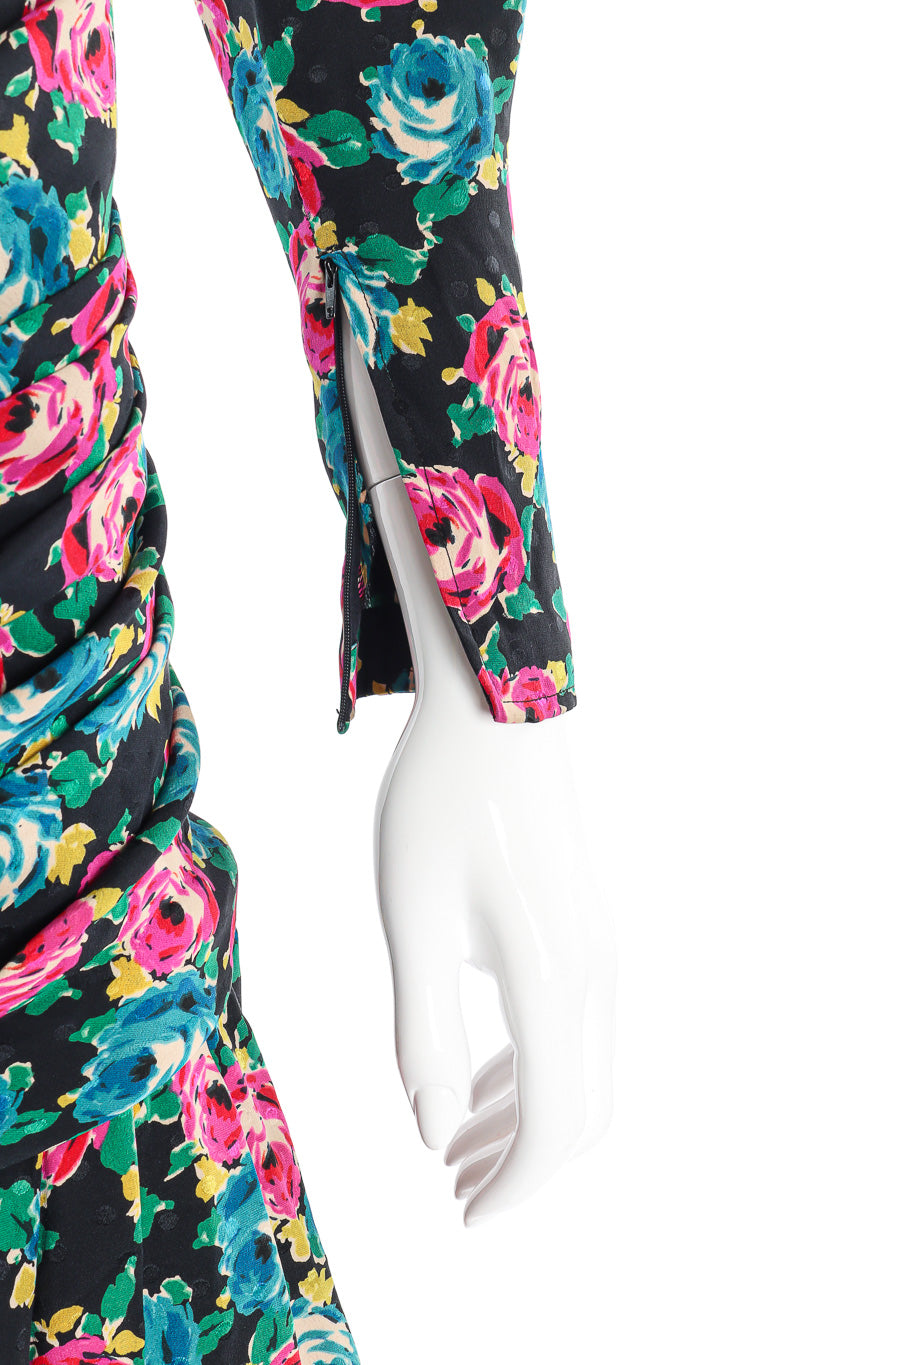 Emanuele Ungaro rose print silk dress sleeve detail @recessla